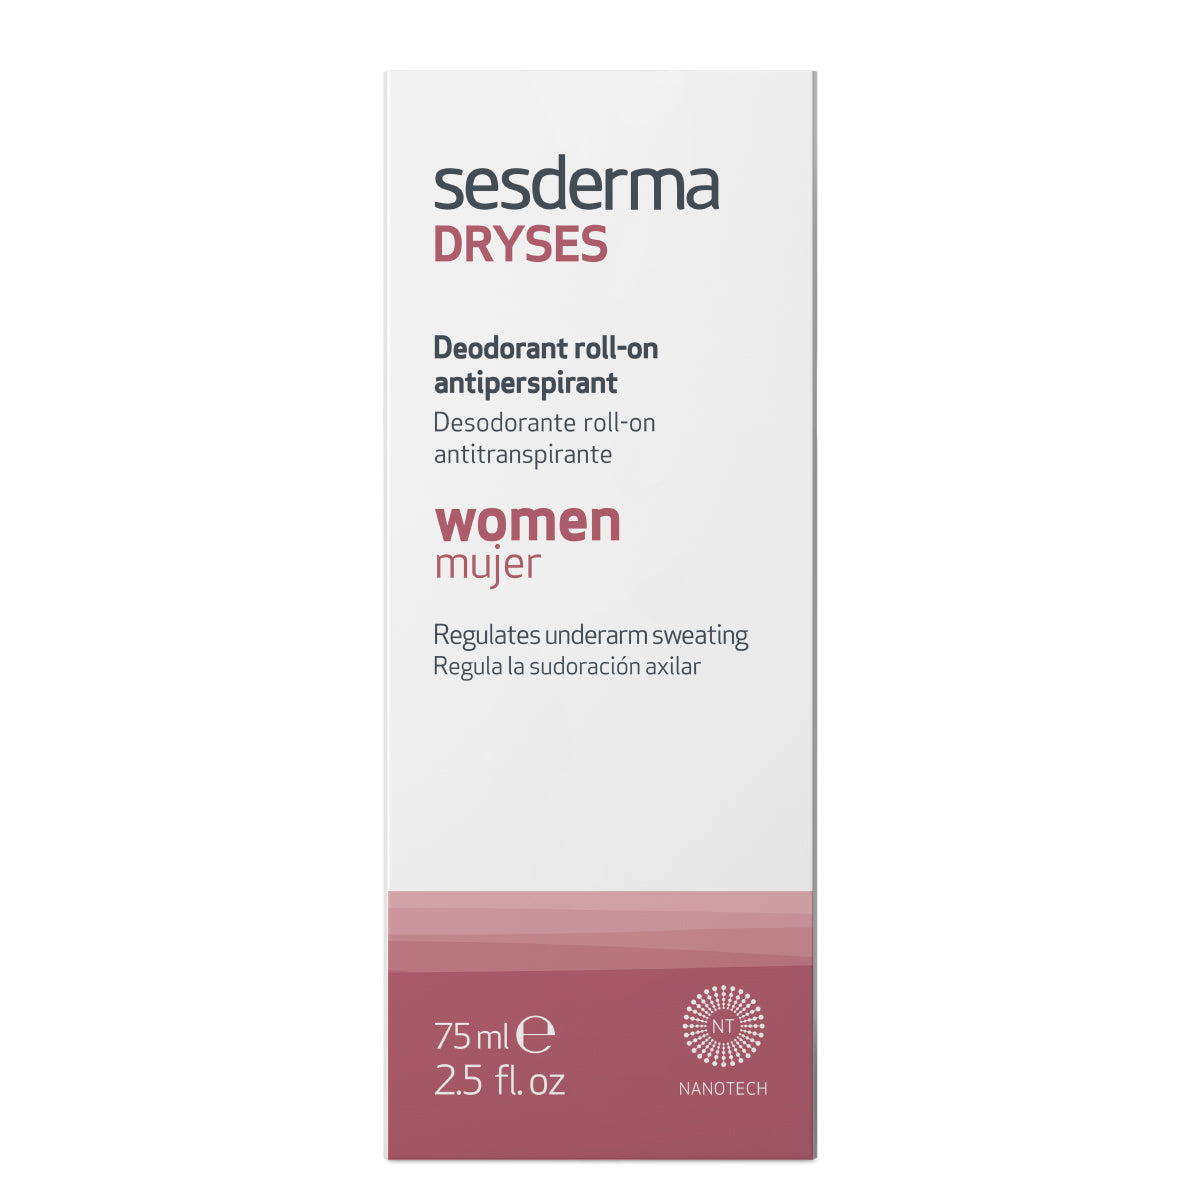 S-dryses desodorante mujer 75ml.